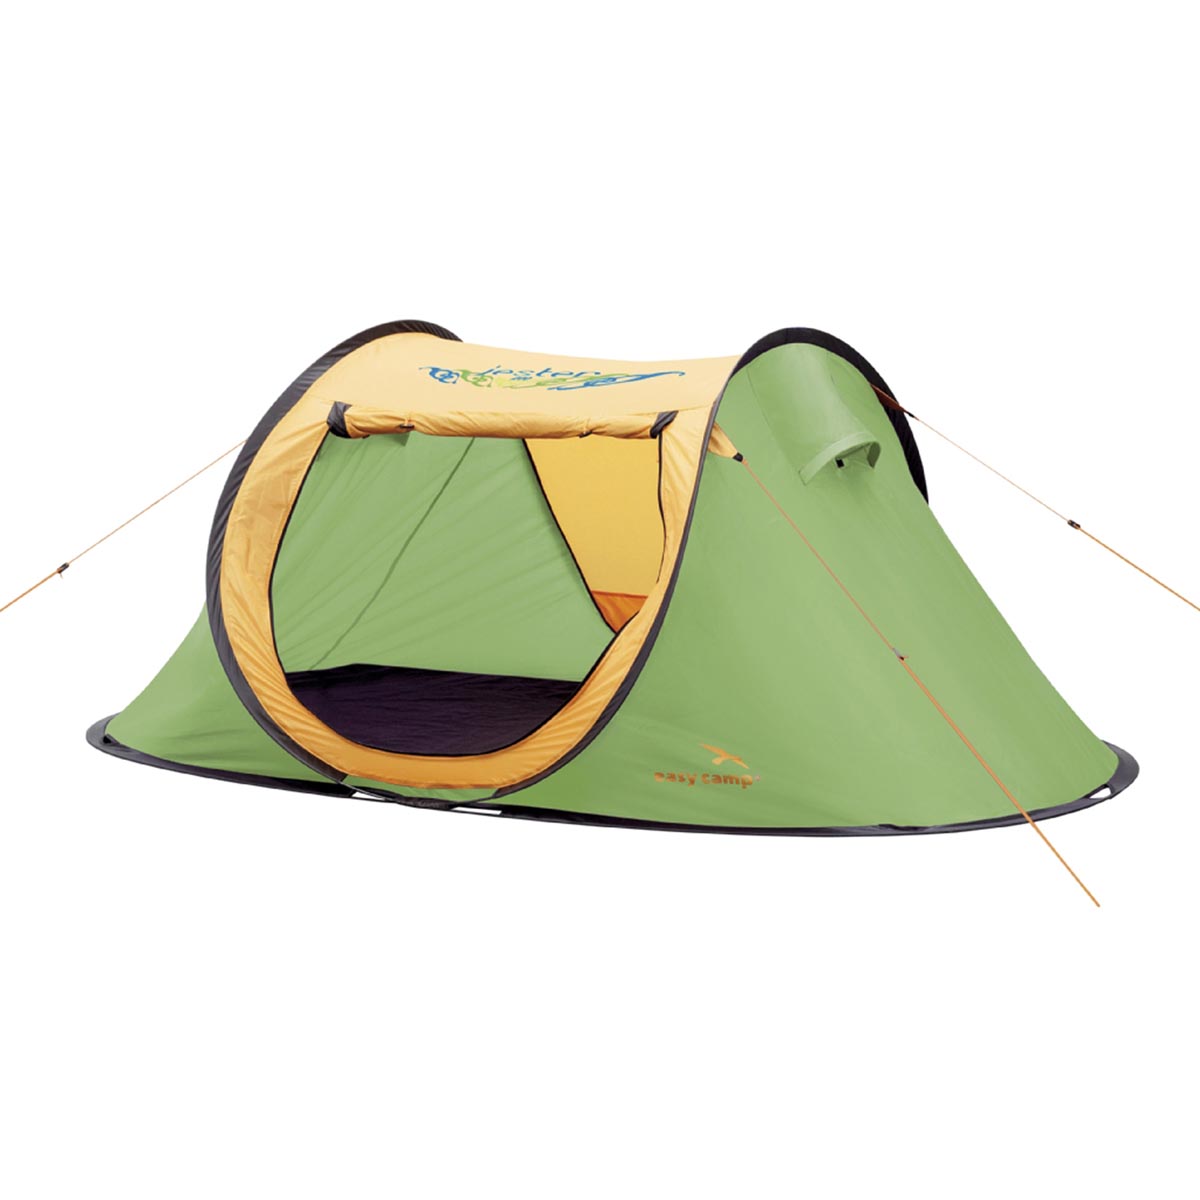 Купить палатку 2х. Палатка Camping самораскладывающаяся. Палатка 2-местная быстросборная Pop up 2 v.2. Палатка easy Camp. Палатка-автомат самораскладывающаяся 4-х местная.